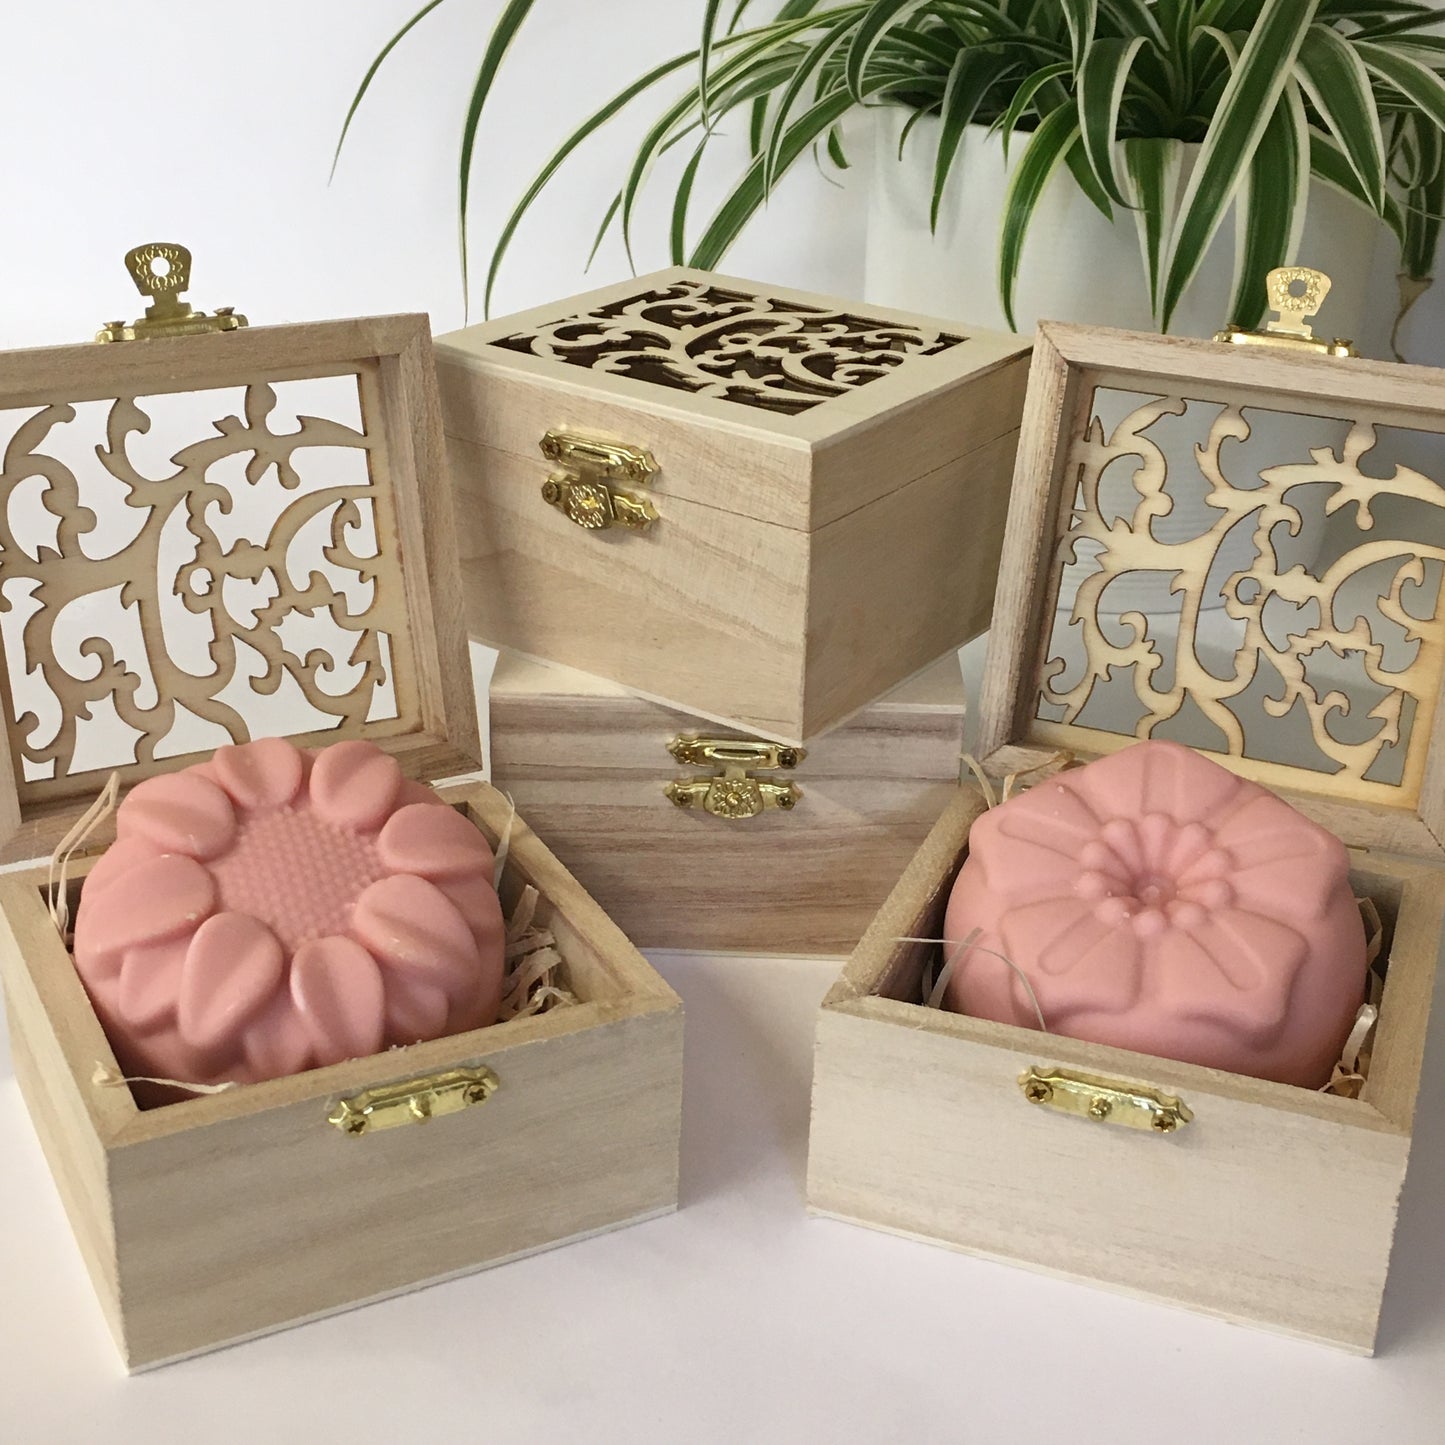 Pine Needle, Cedarwood & Lemongrass Soap in Ornate Wooden Box